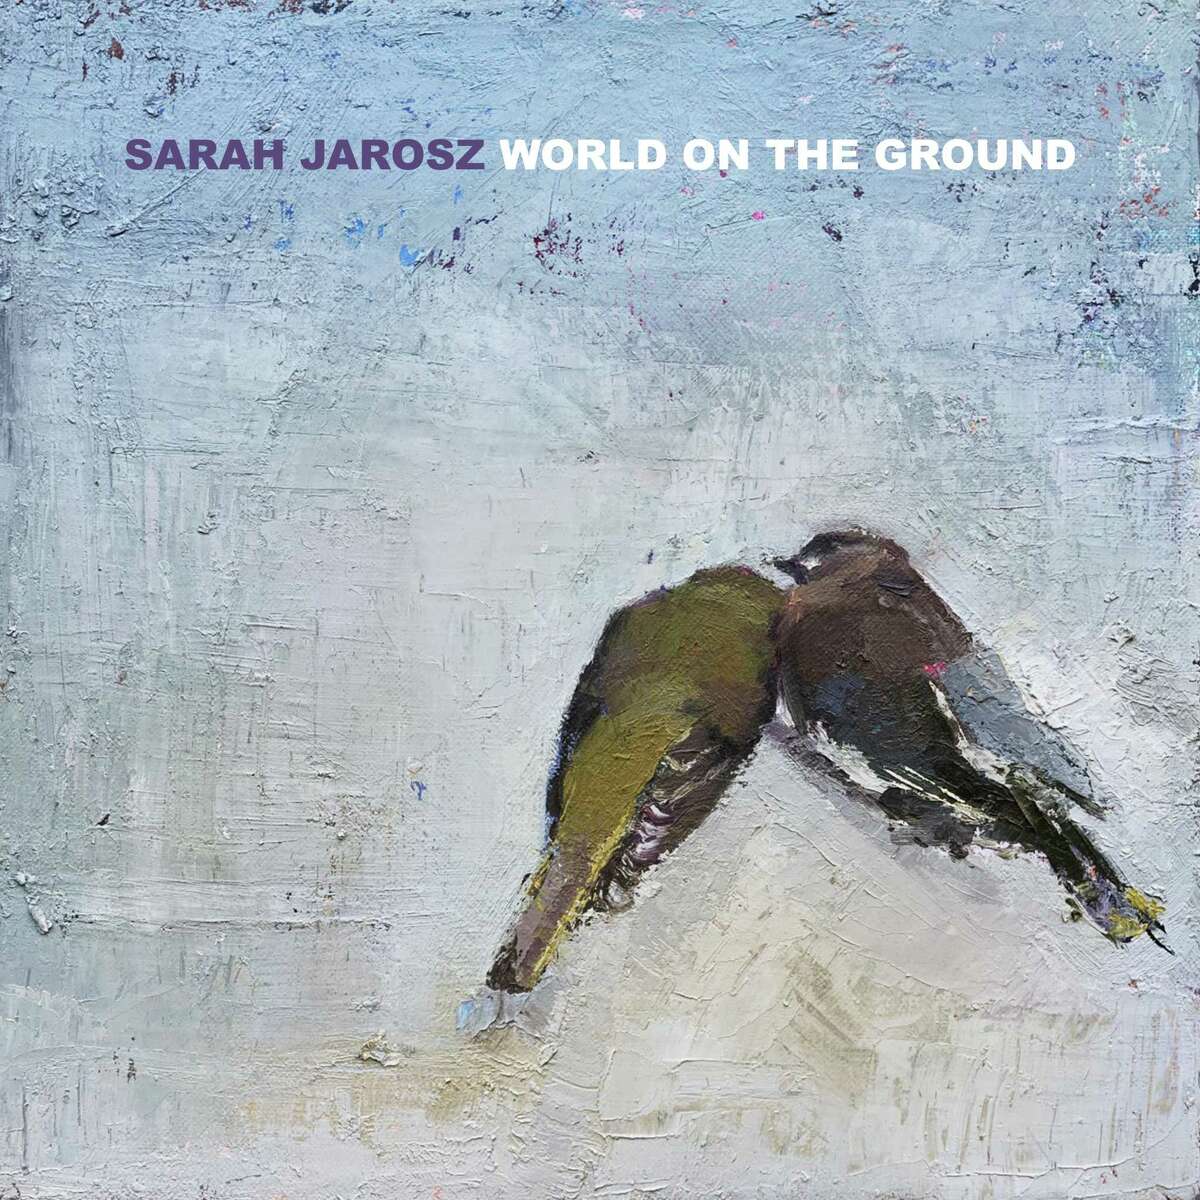 “World on the Ground” by Sarah Jarosz